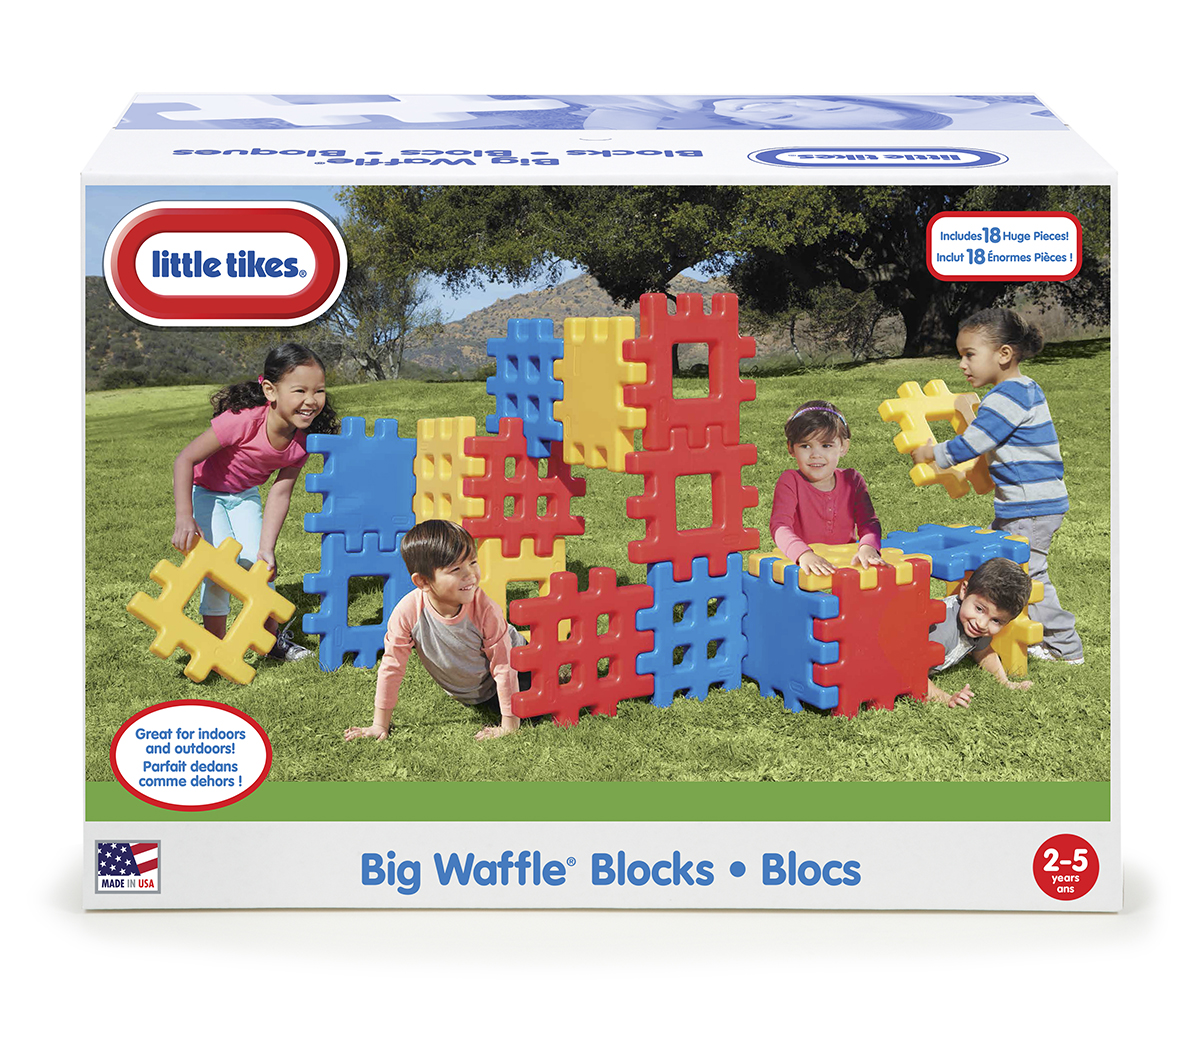 mega waffle blocks